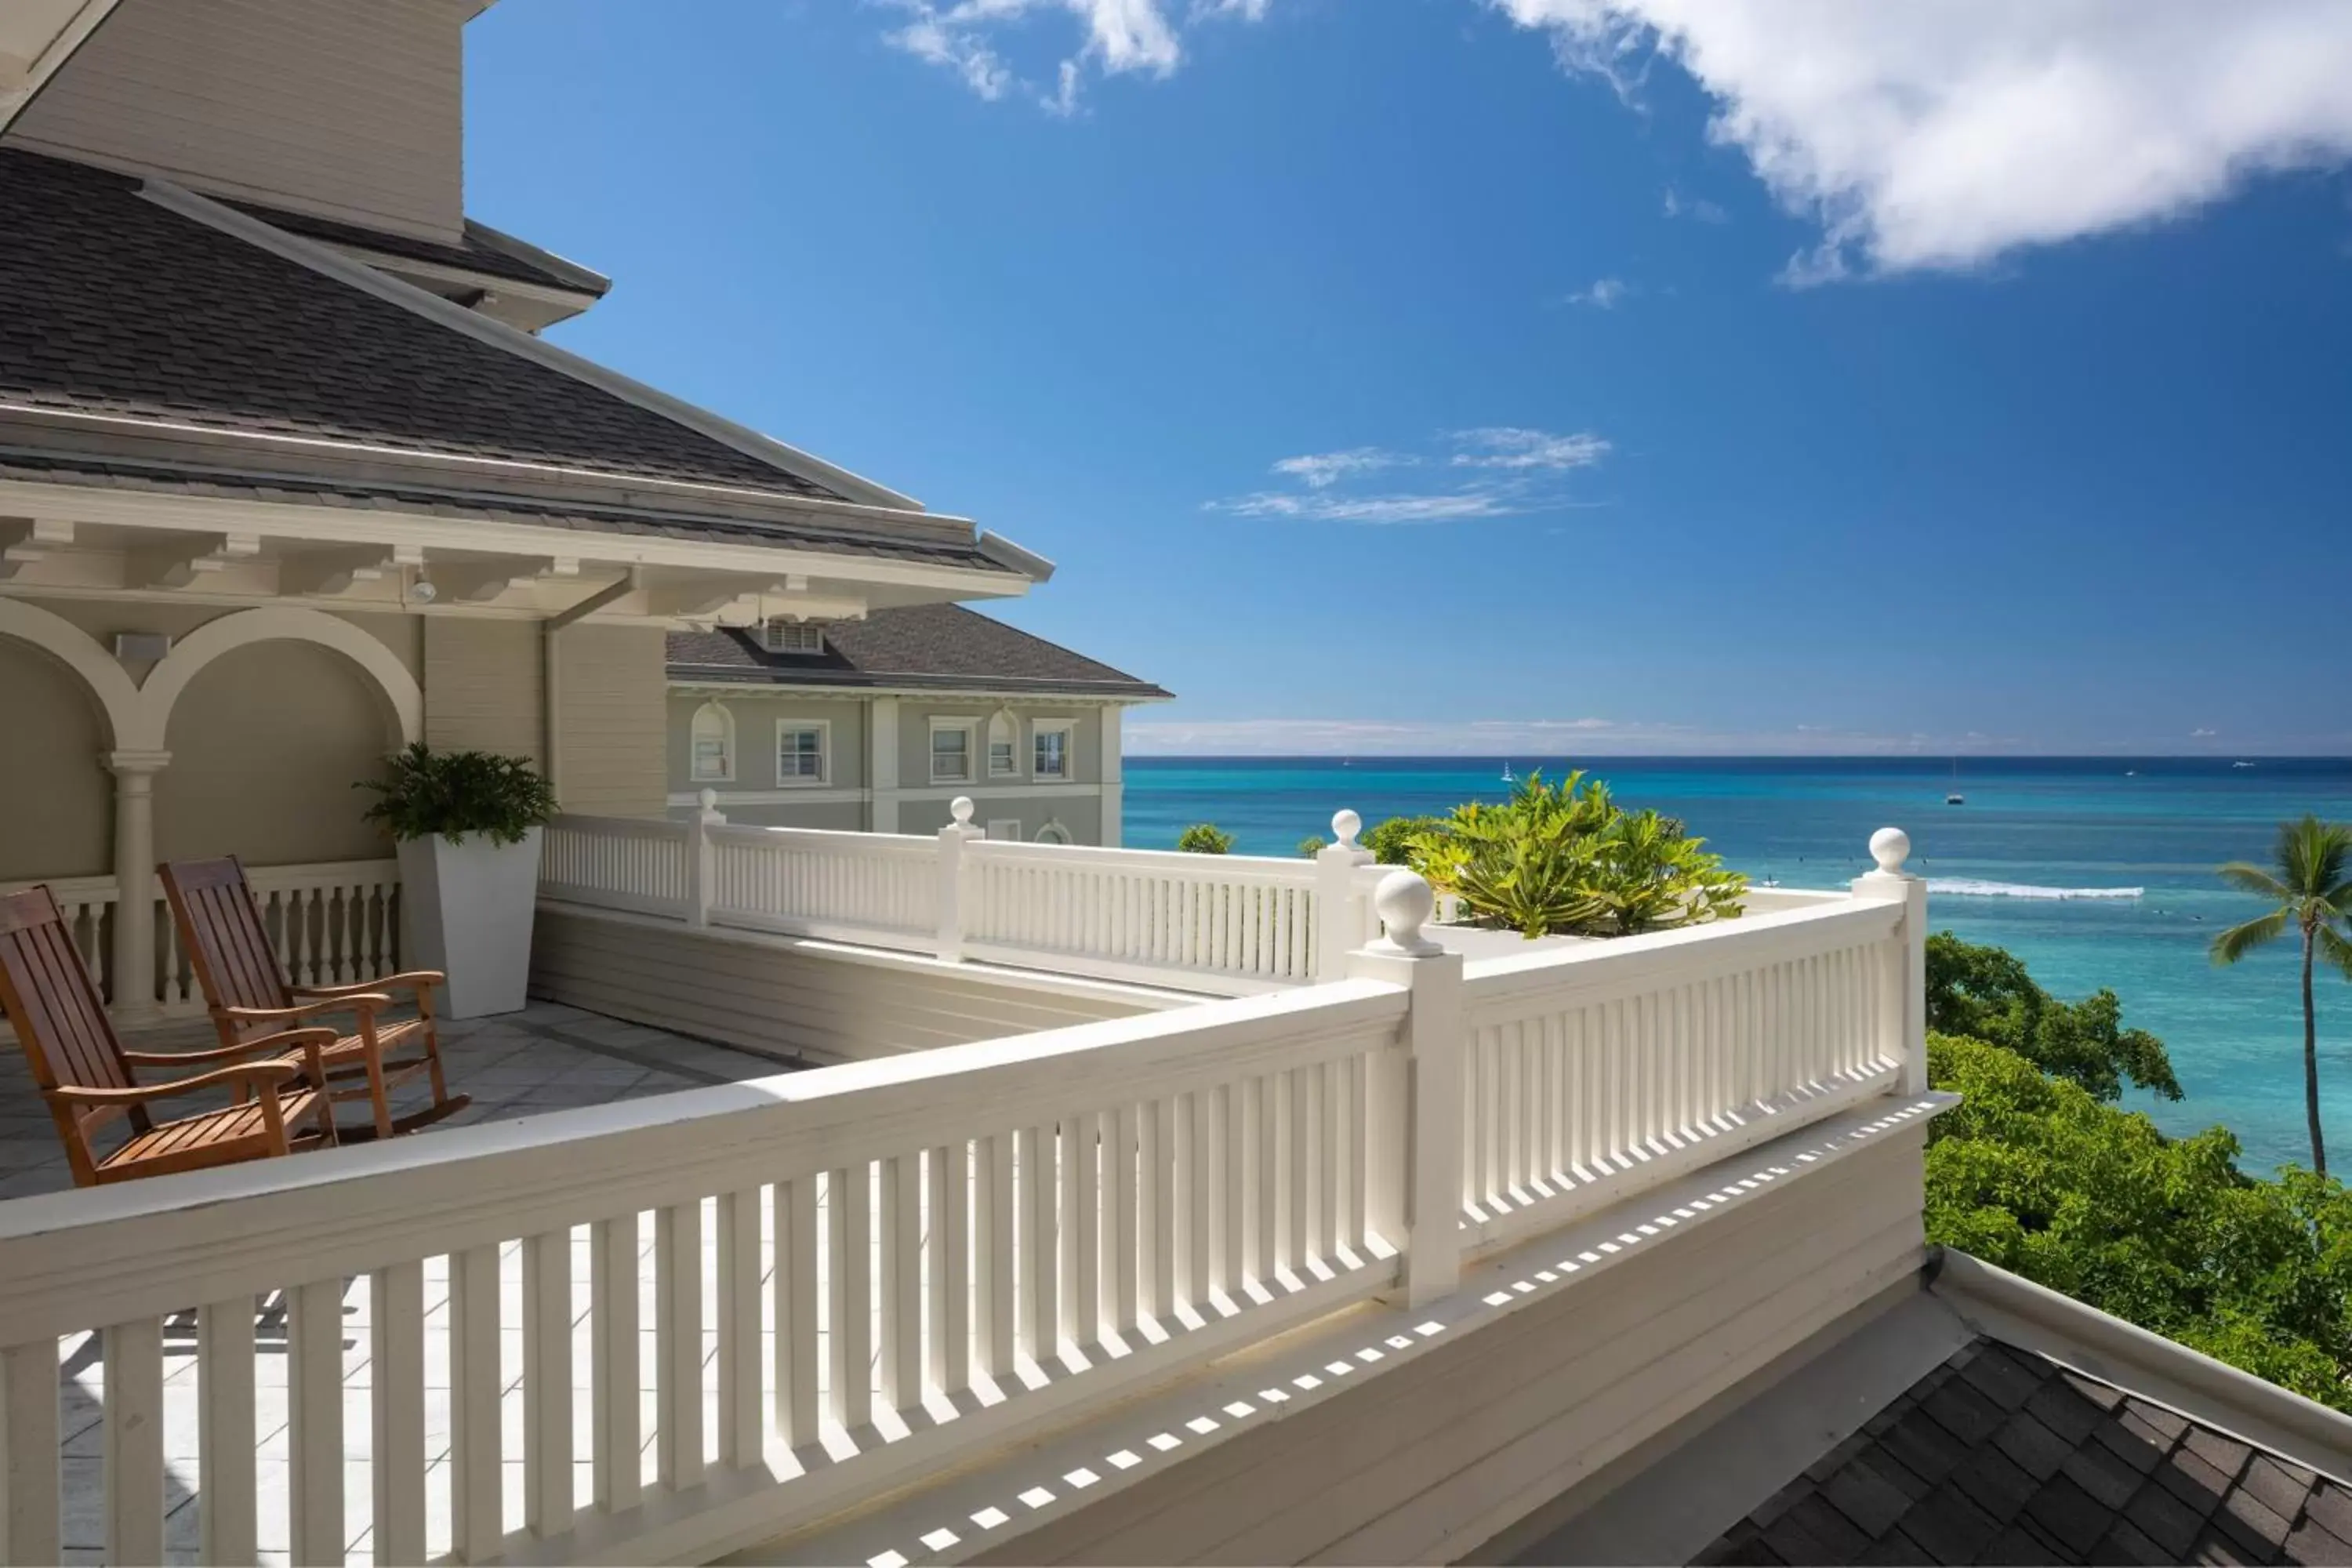 Meeting/conference room, Balcony/Terrace in Moana Surfrider, A Westin Resort & Spa, Waikiki Beach